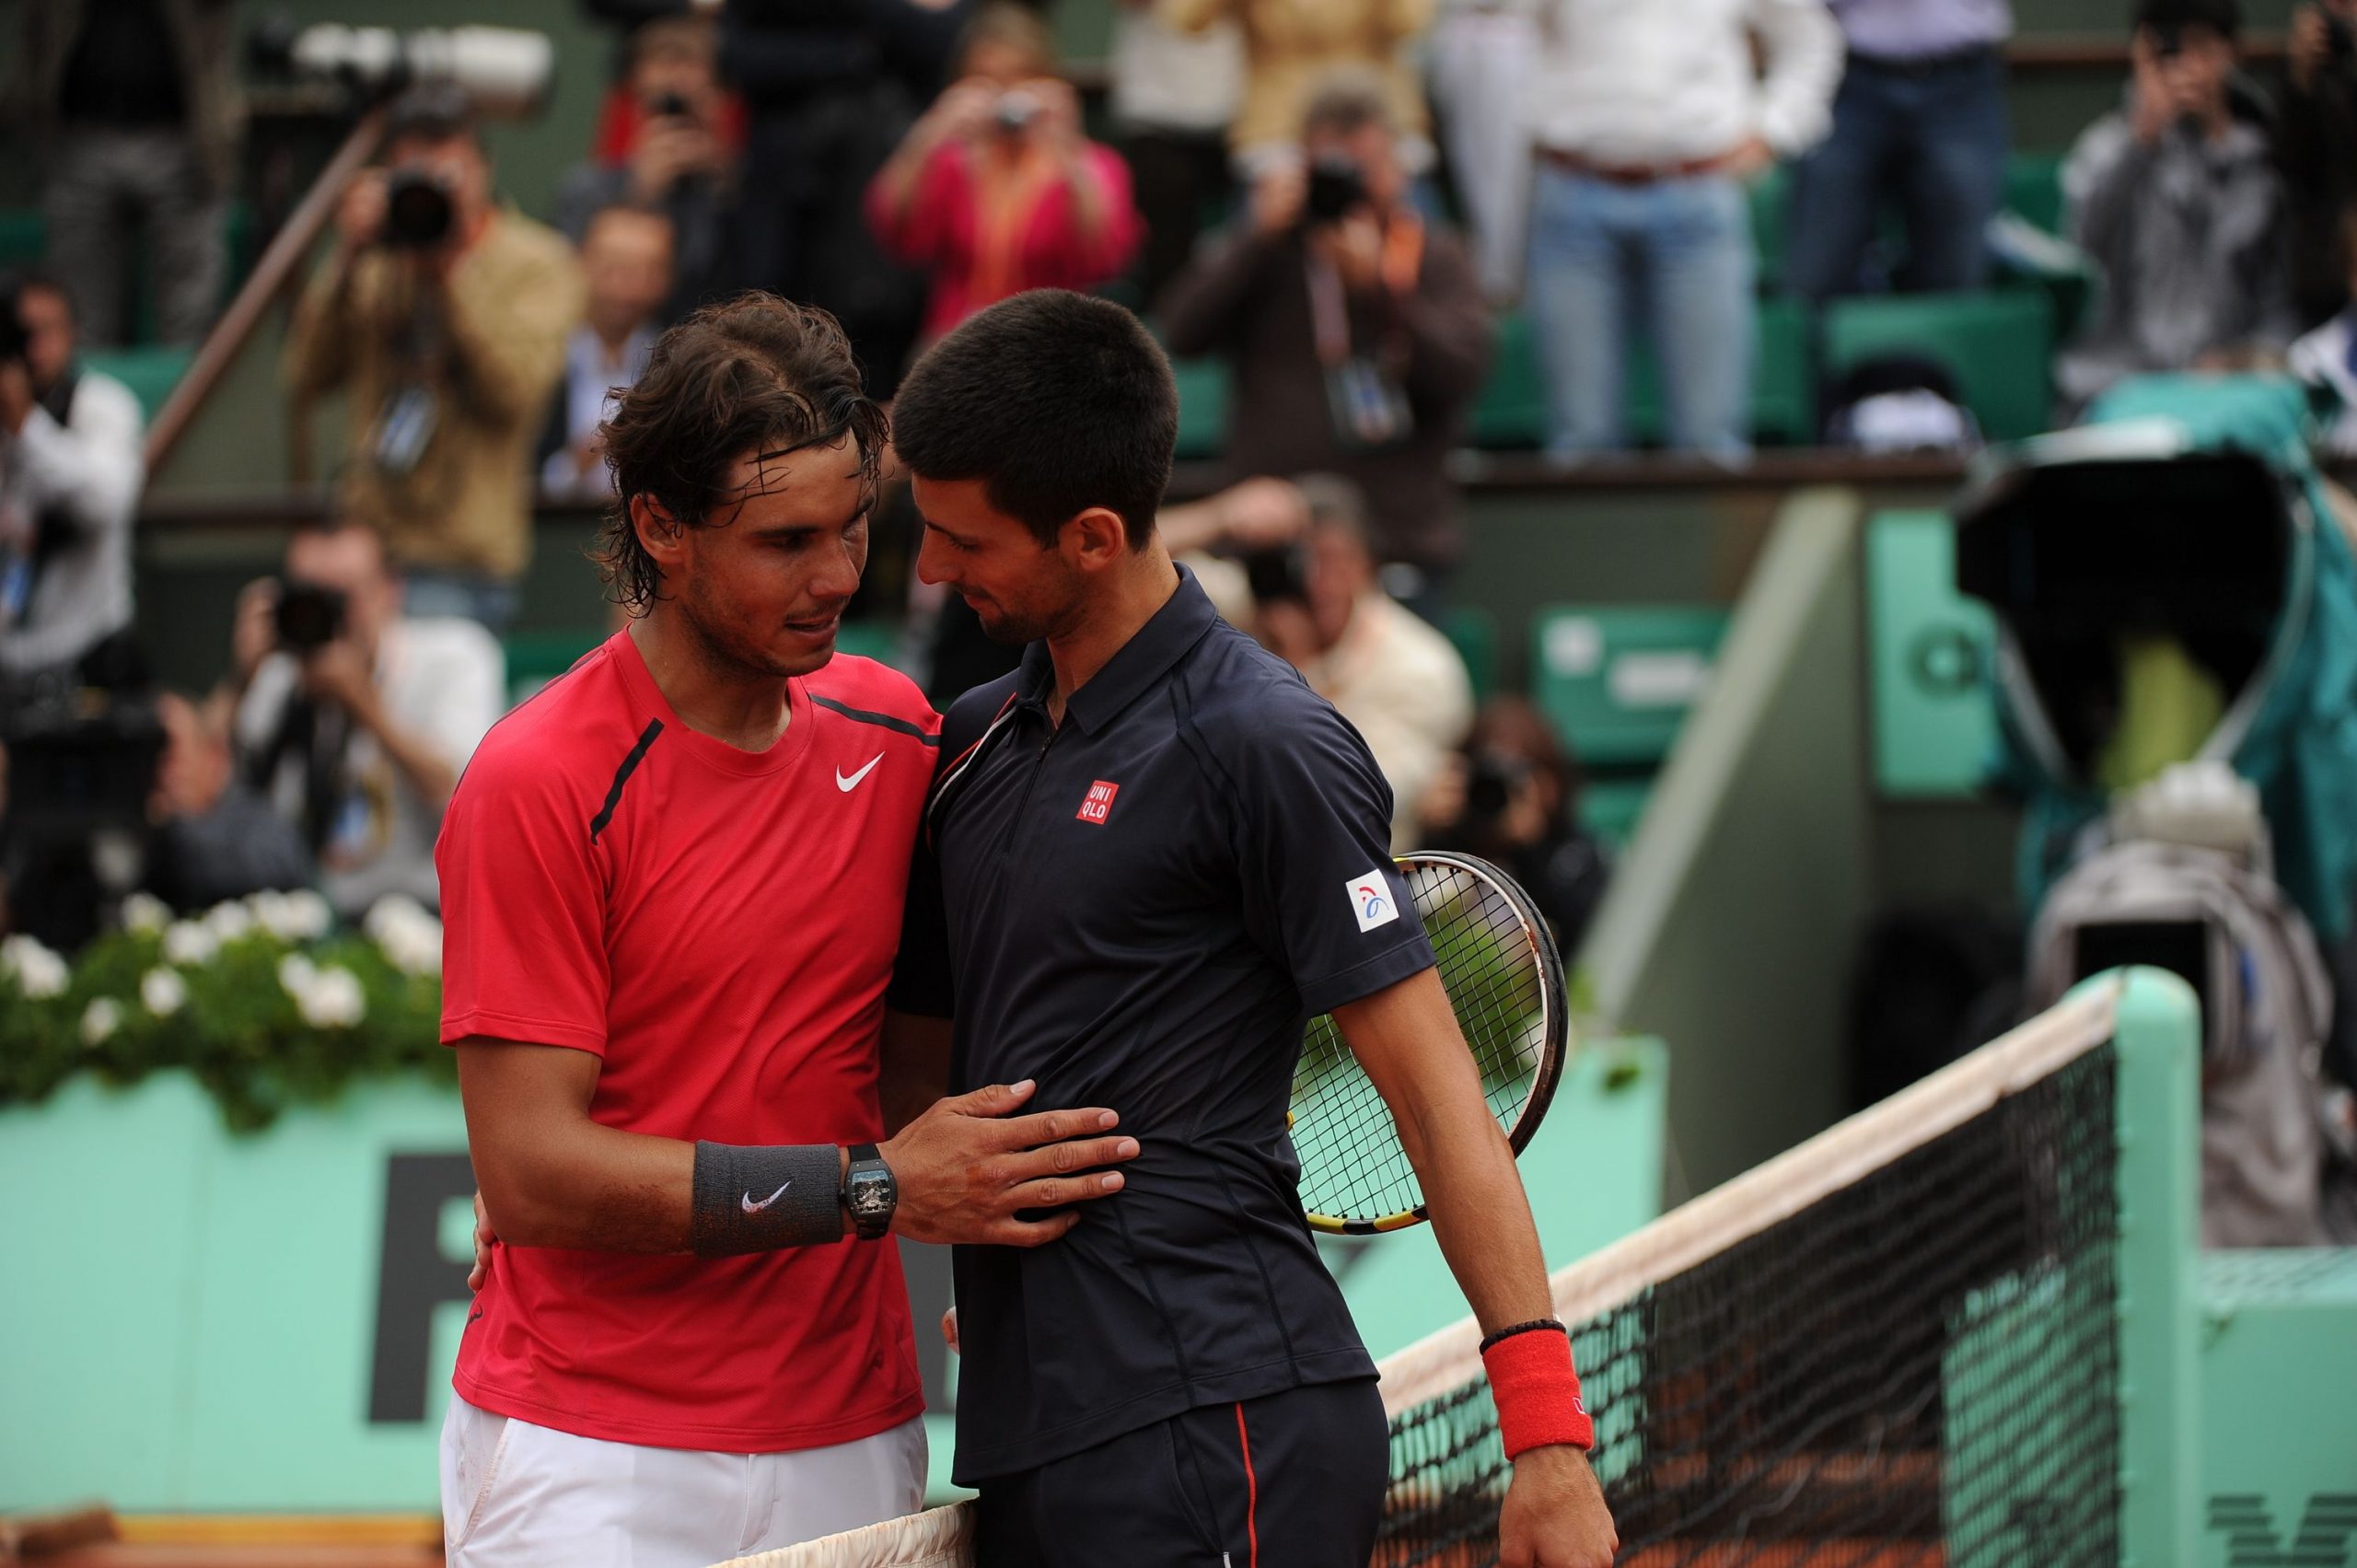 Relentless: Third set in Nadal, Djokovic semifinal match runs over 90 minutes